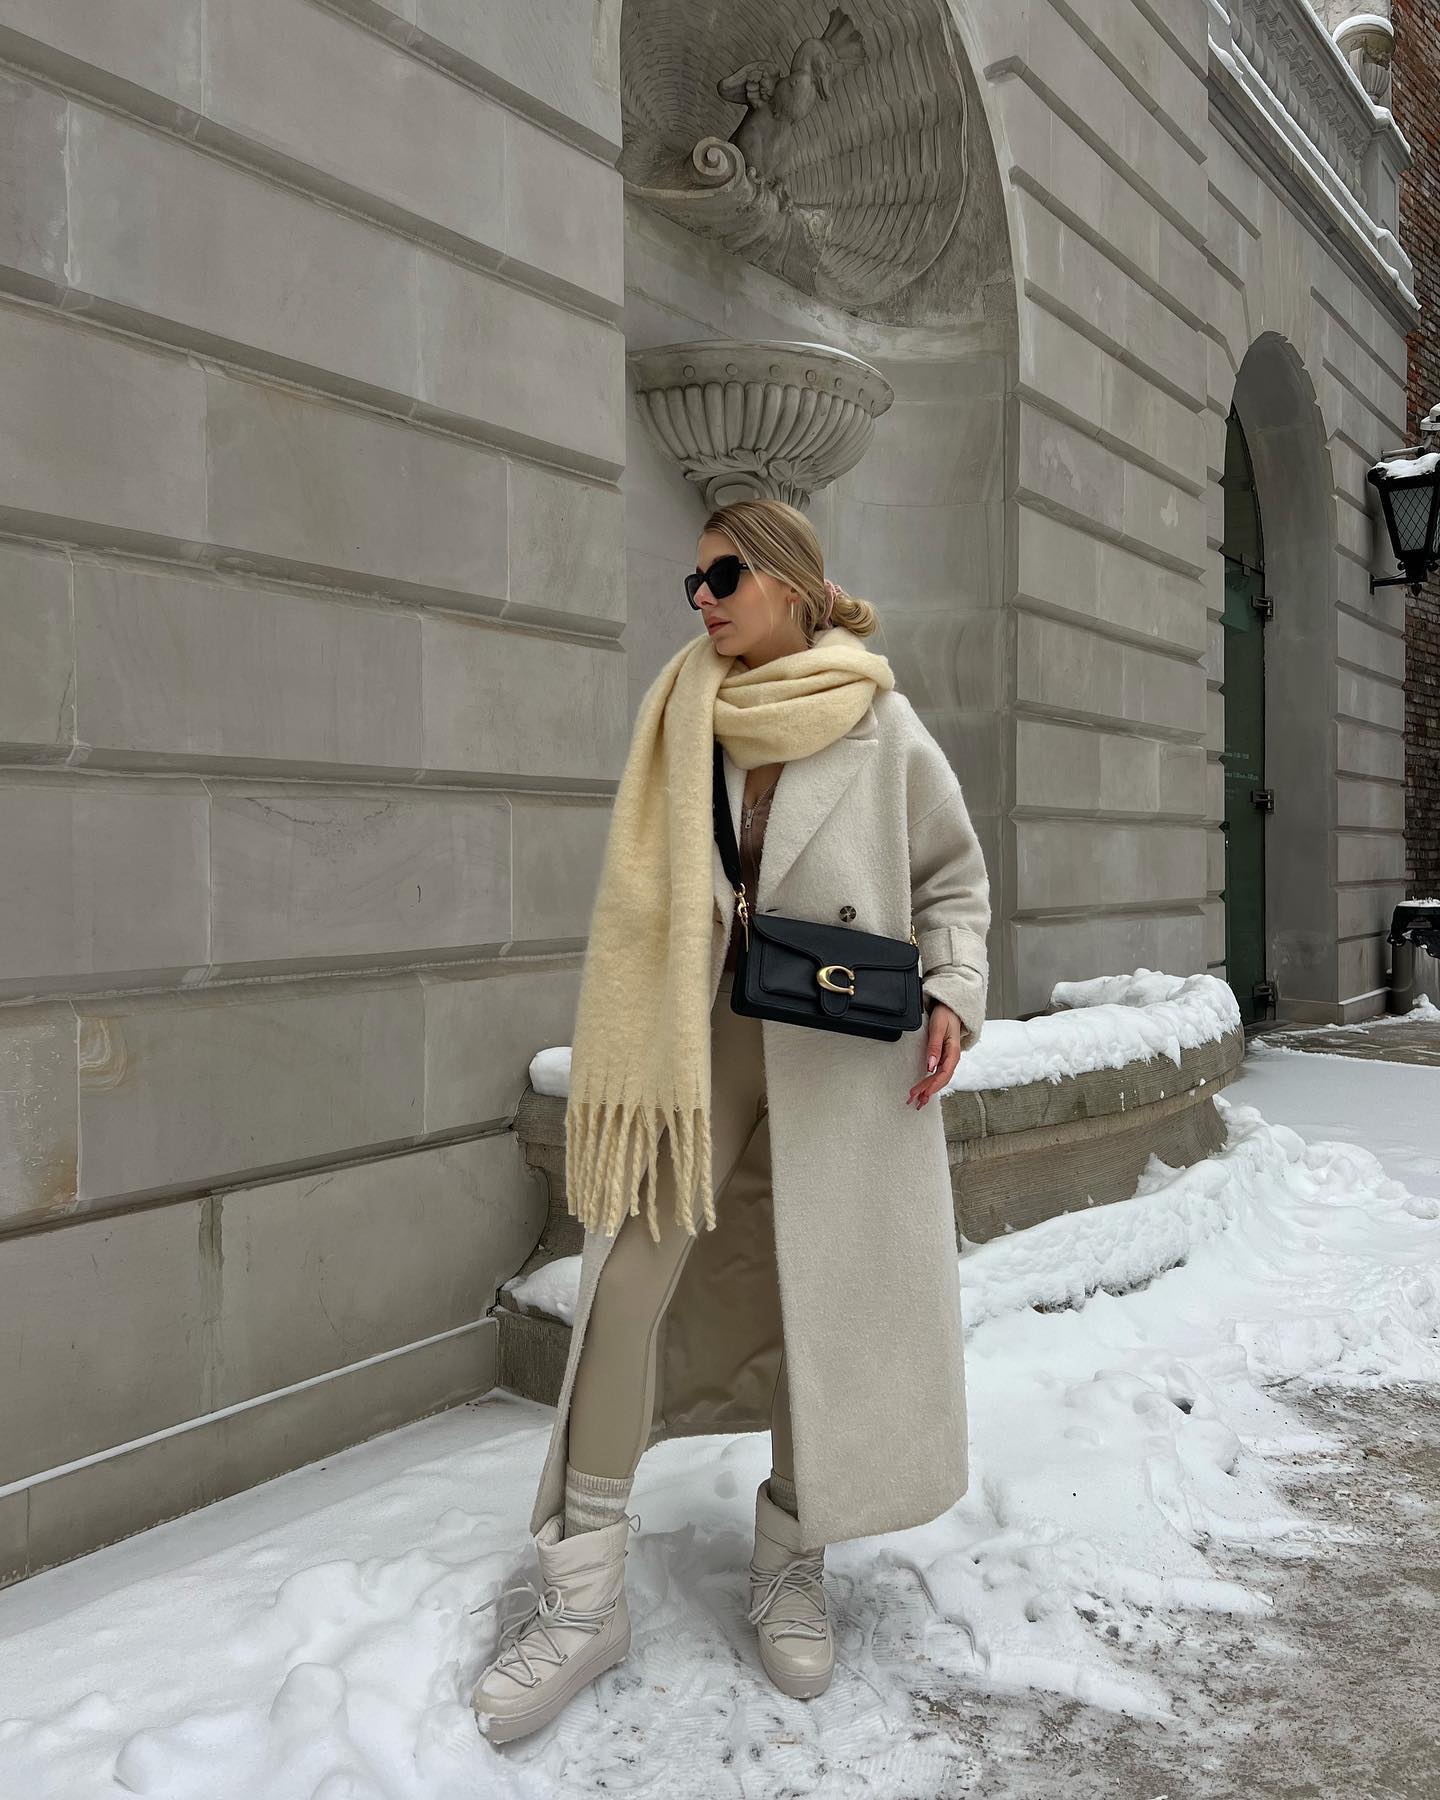 Old Money in Winter: Wardrobe Inspo that Shows Refined Taste